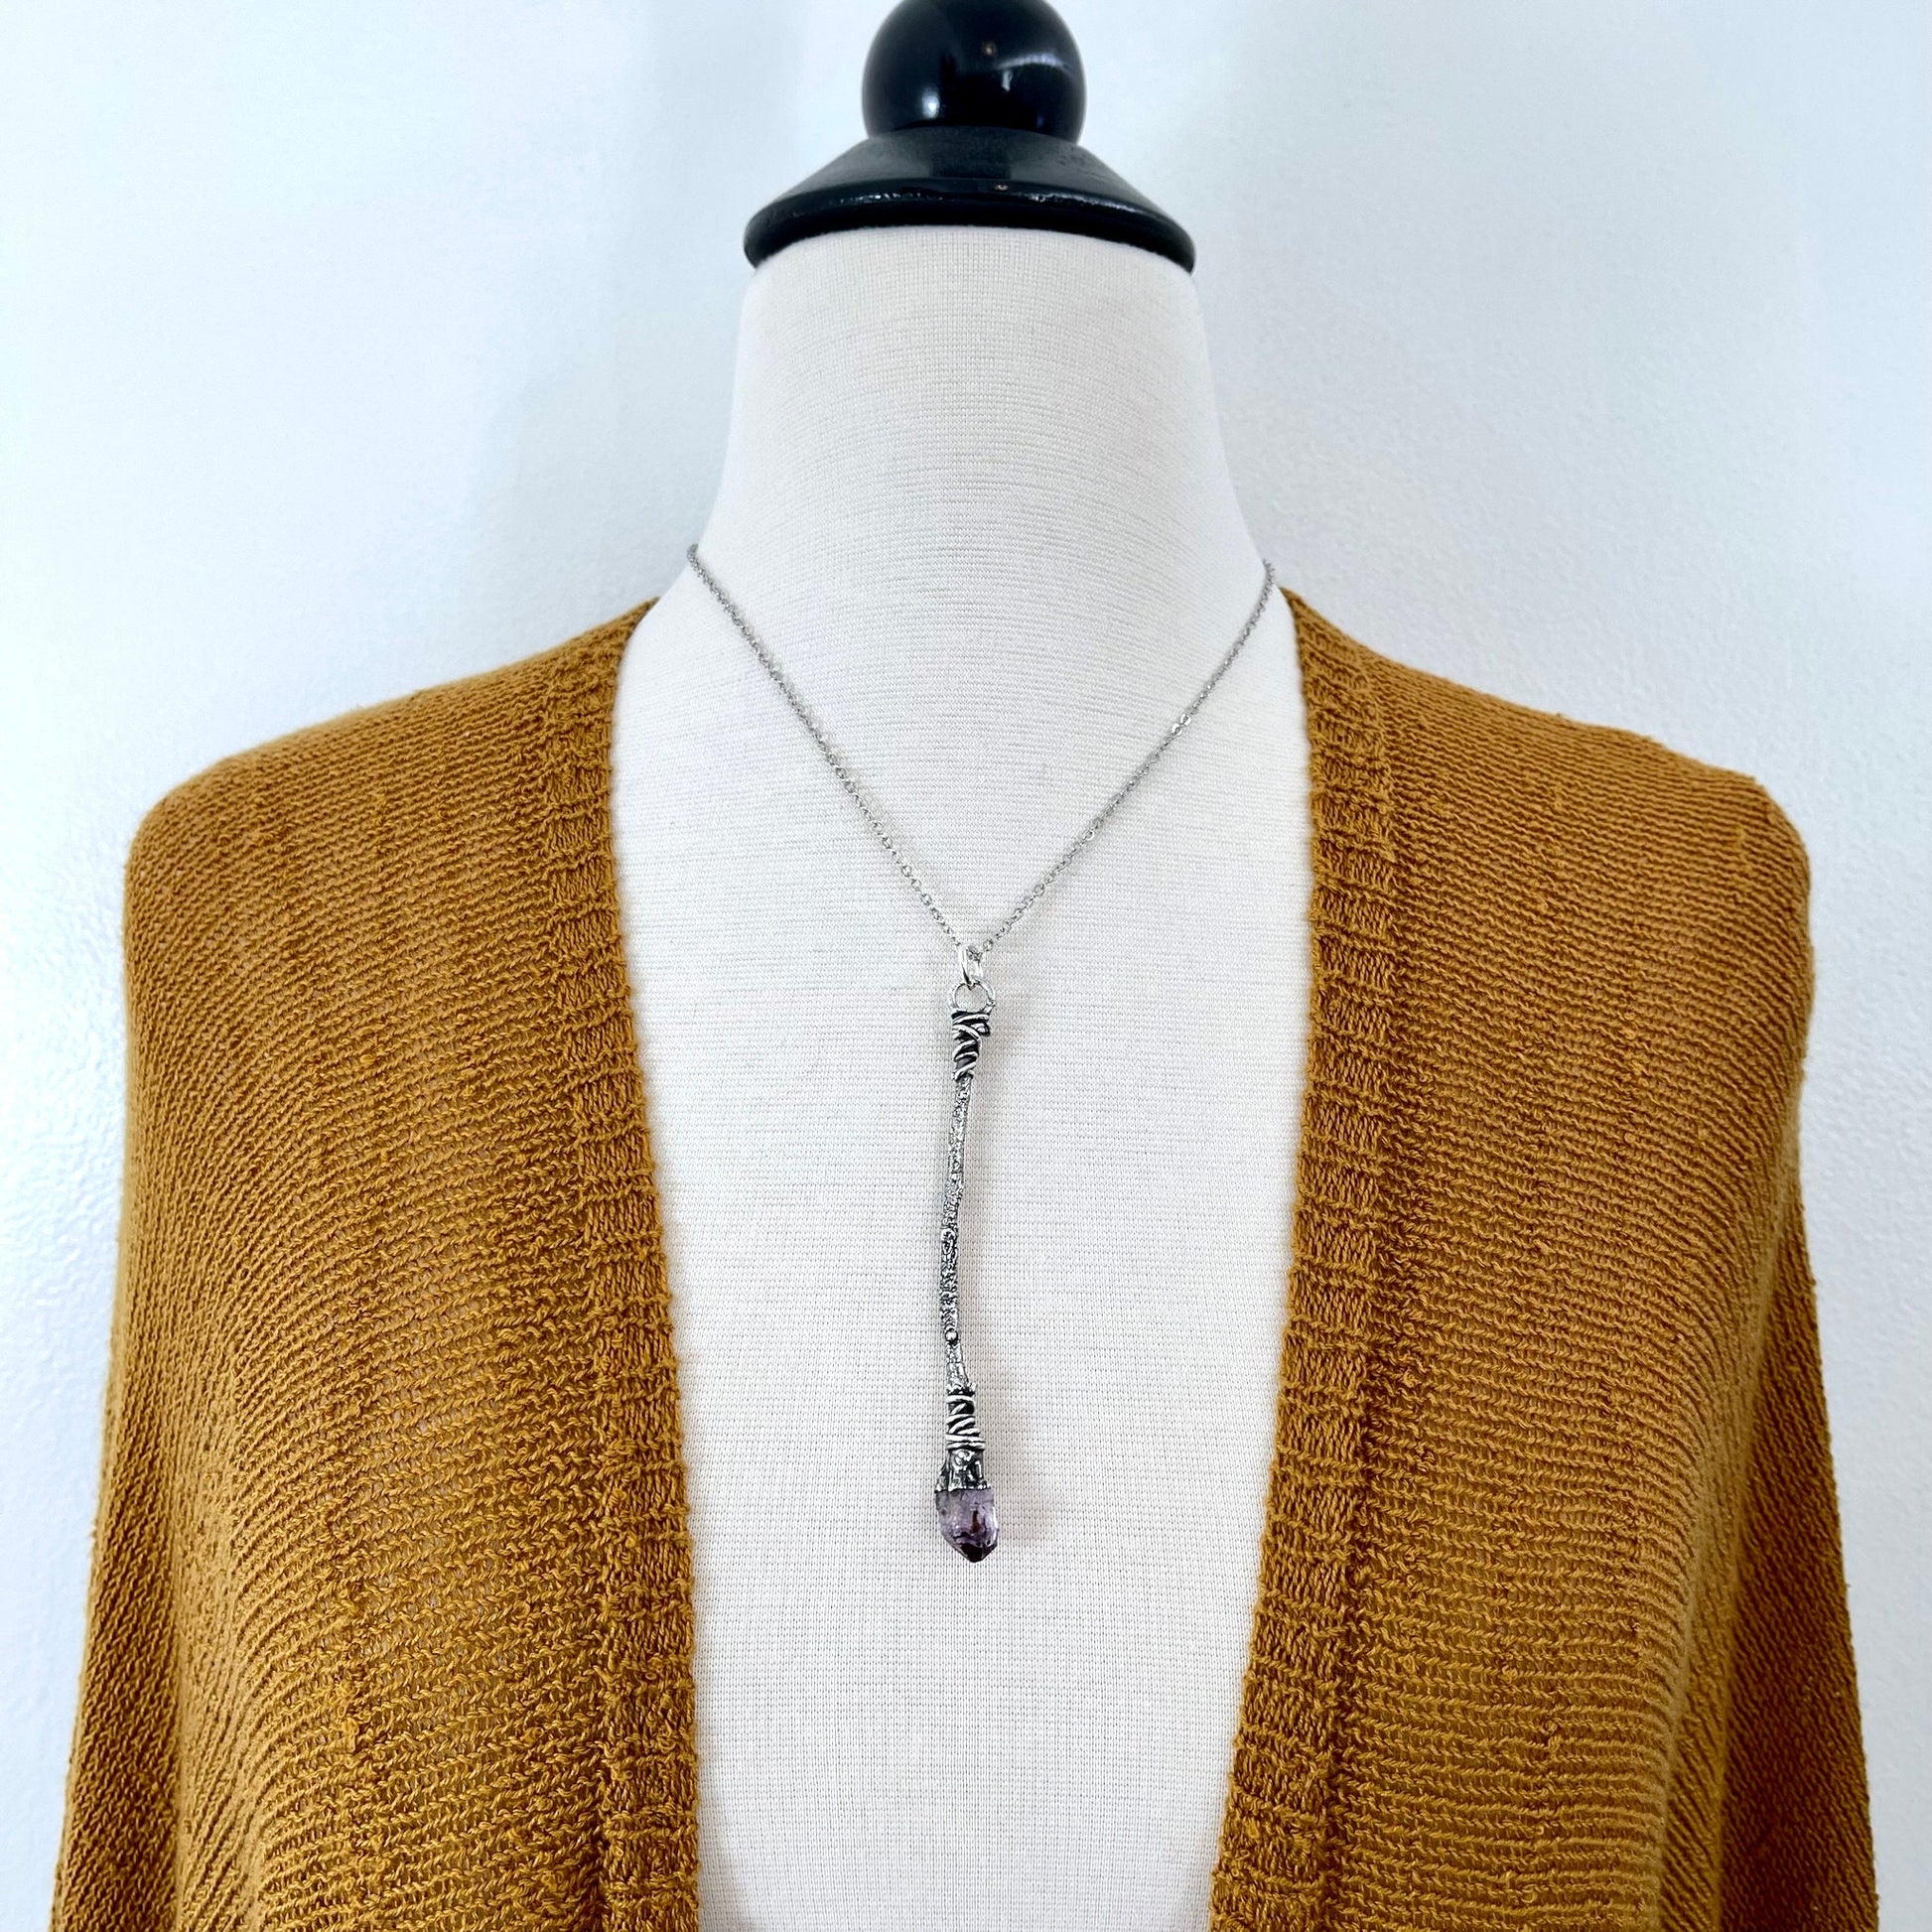 Crystal Wand Necklace Fine Silver Raw Amethyst Necklace / Wizard Witches Wand Necklace Pendant - Foxlark Crystal Jewelry